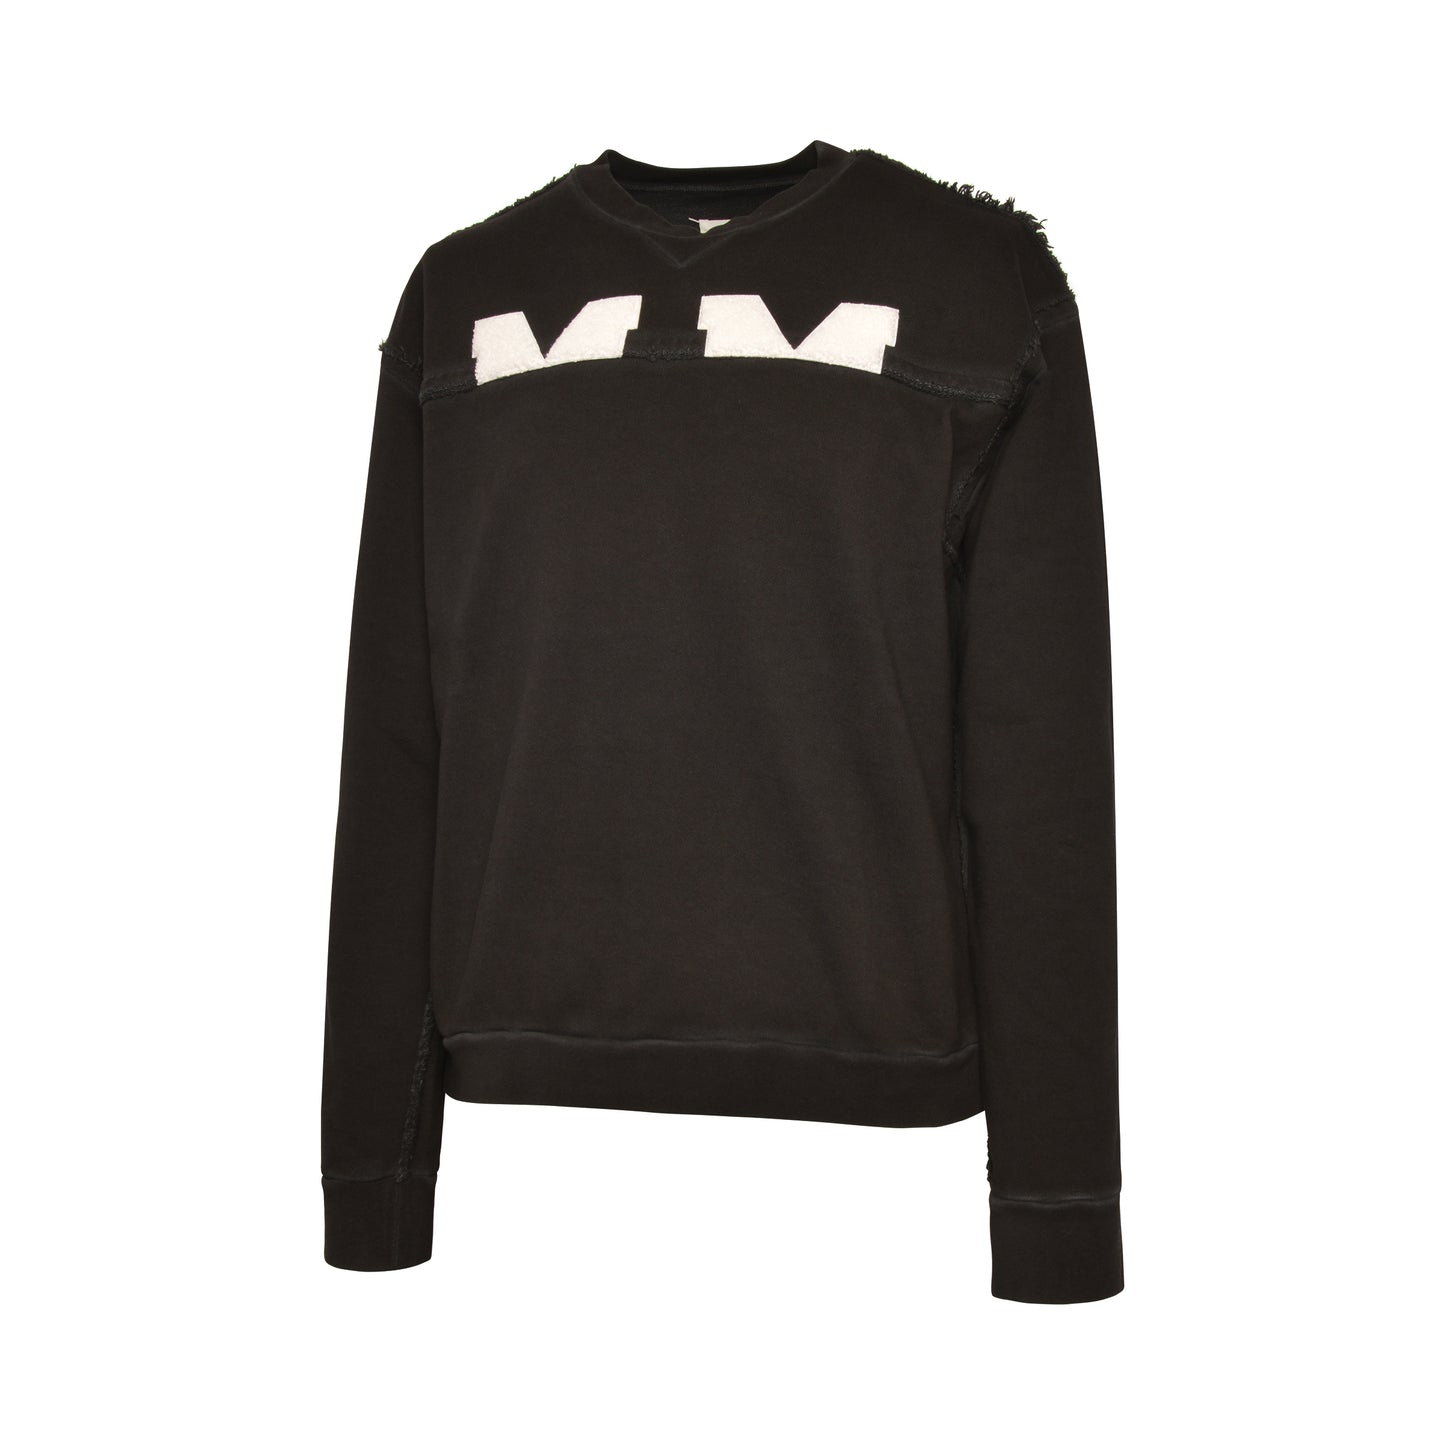 MM Patch Sweatshirt in Black